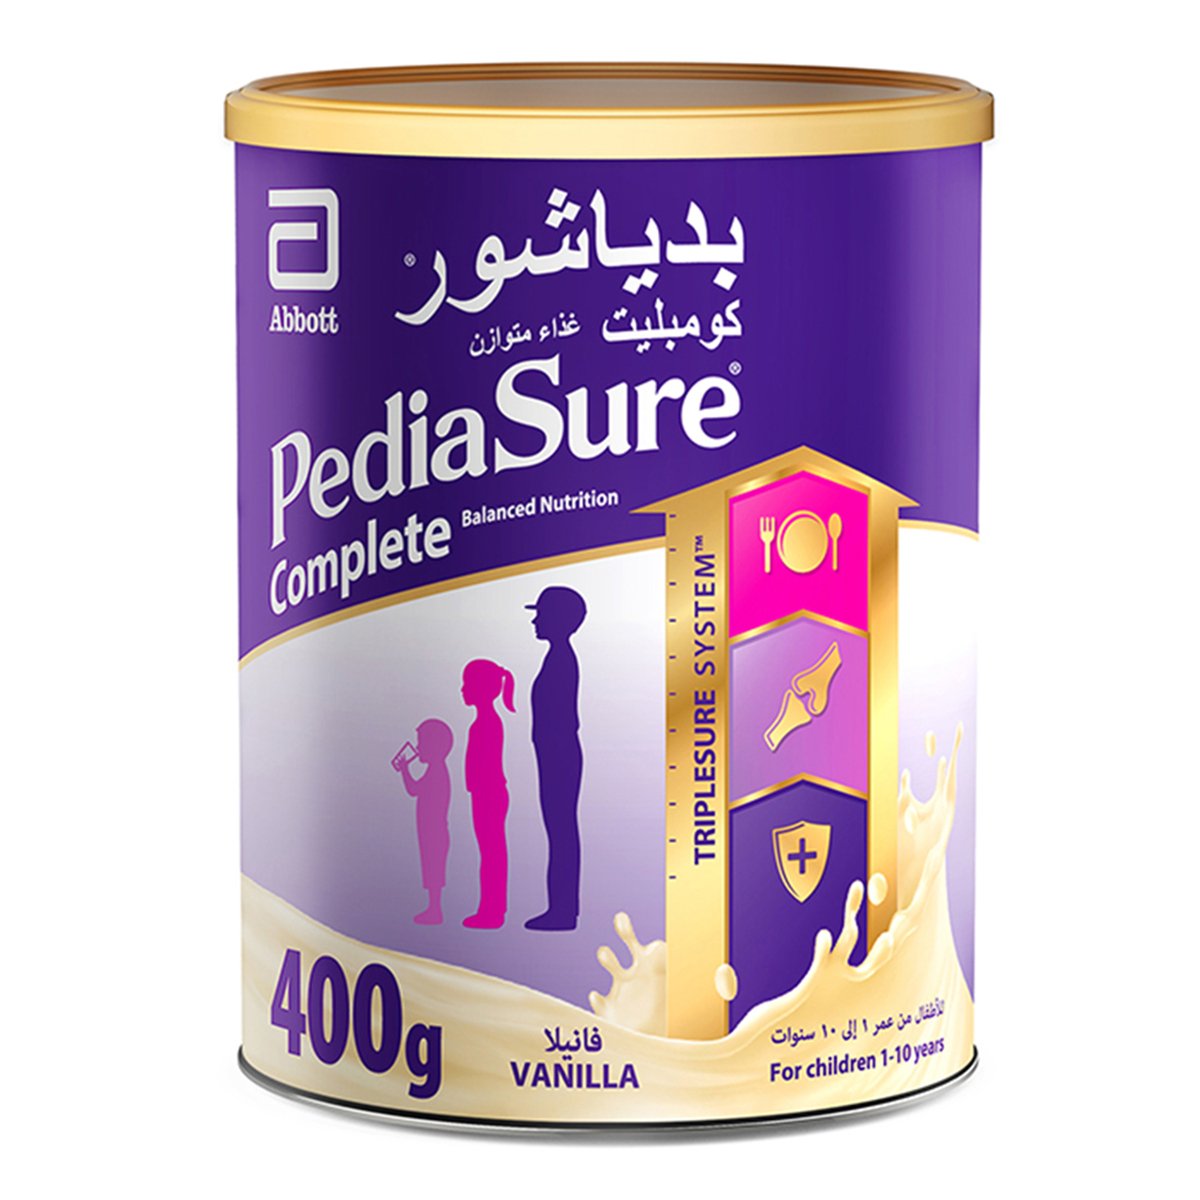 Pediasure Complete Balanced Nutrition Vanilla Flavor 1-10 Years 400 g